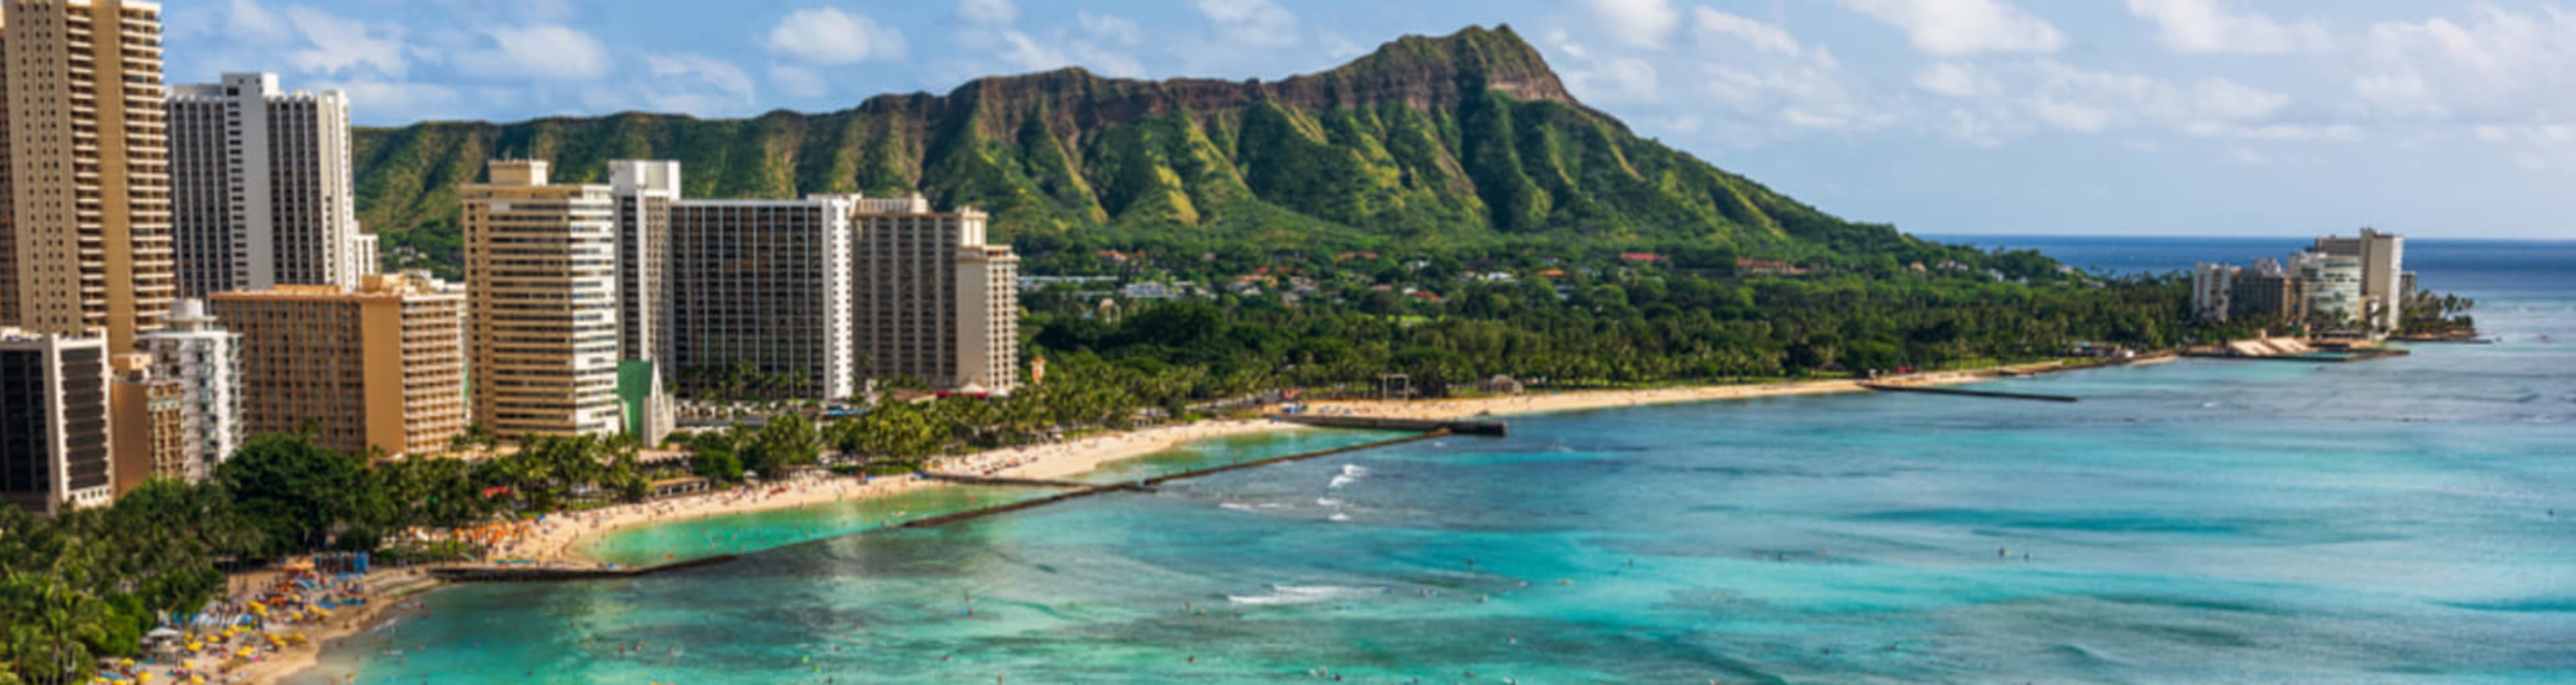 Honolulu panorama with Waikiki Beach and Diamond Head peak.